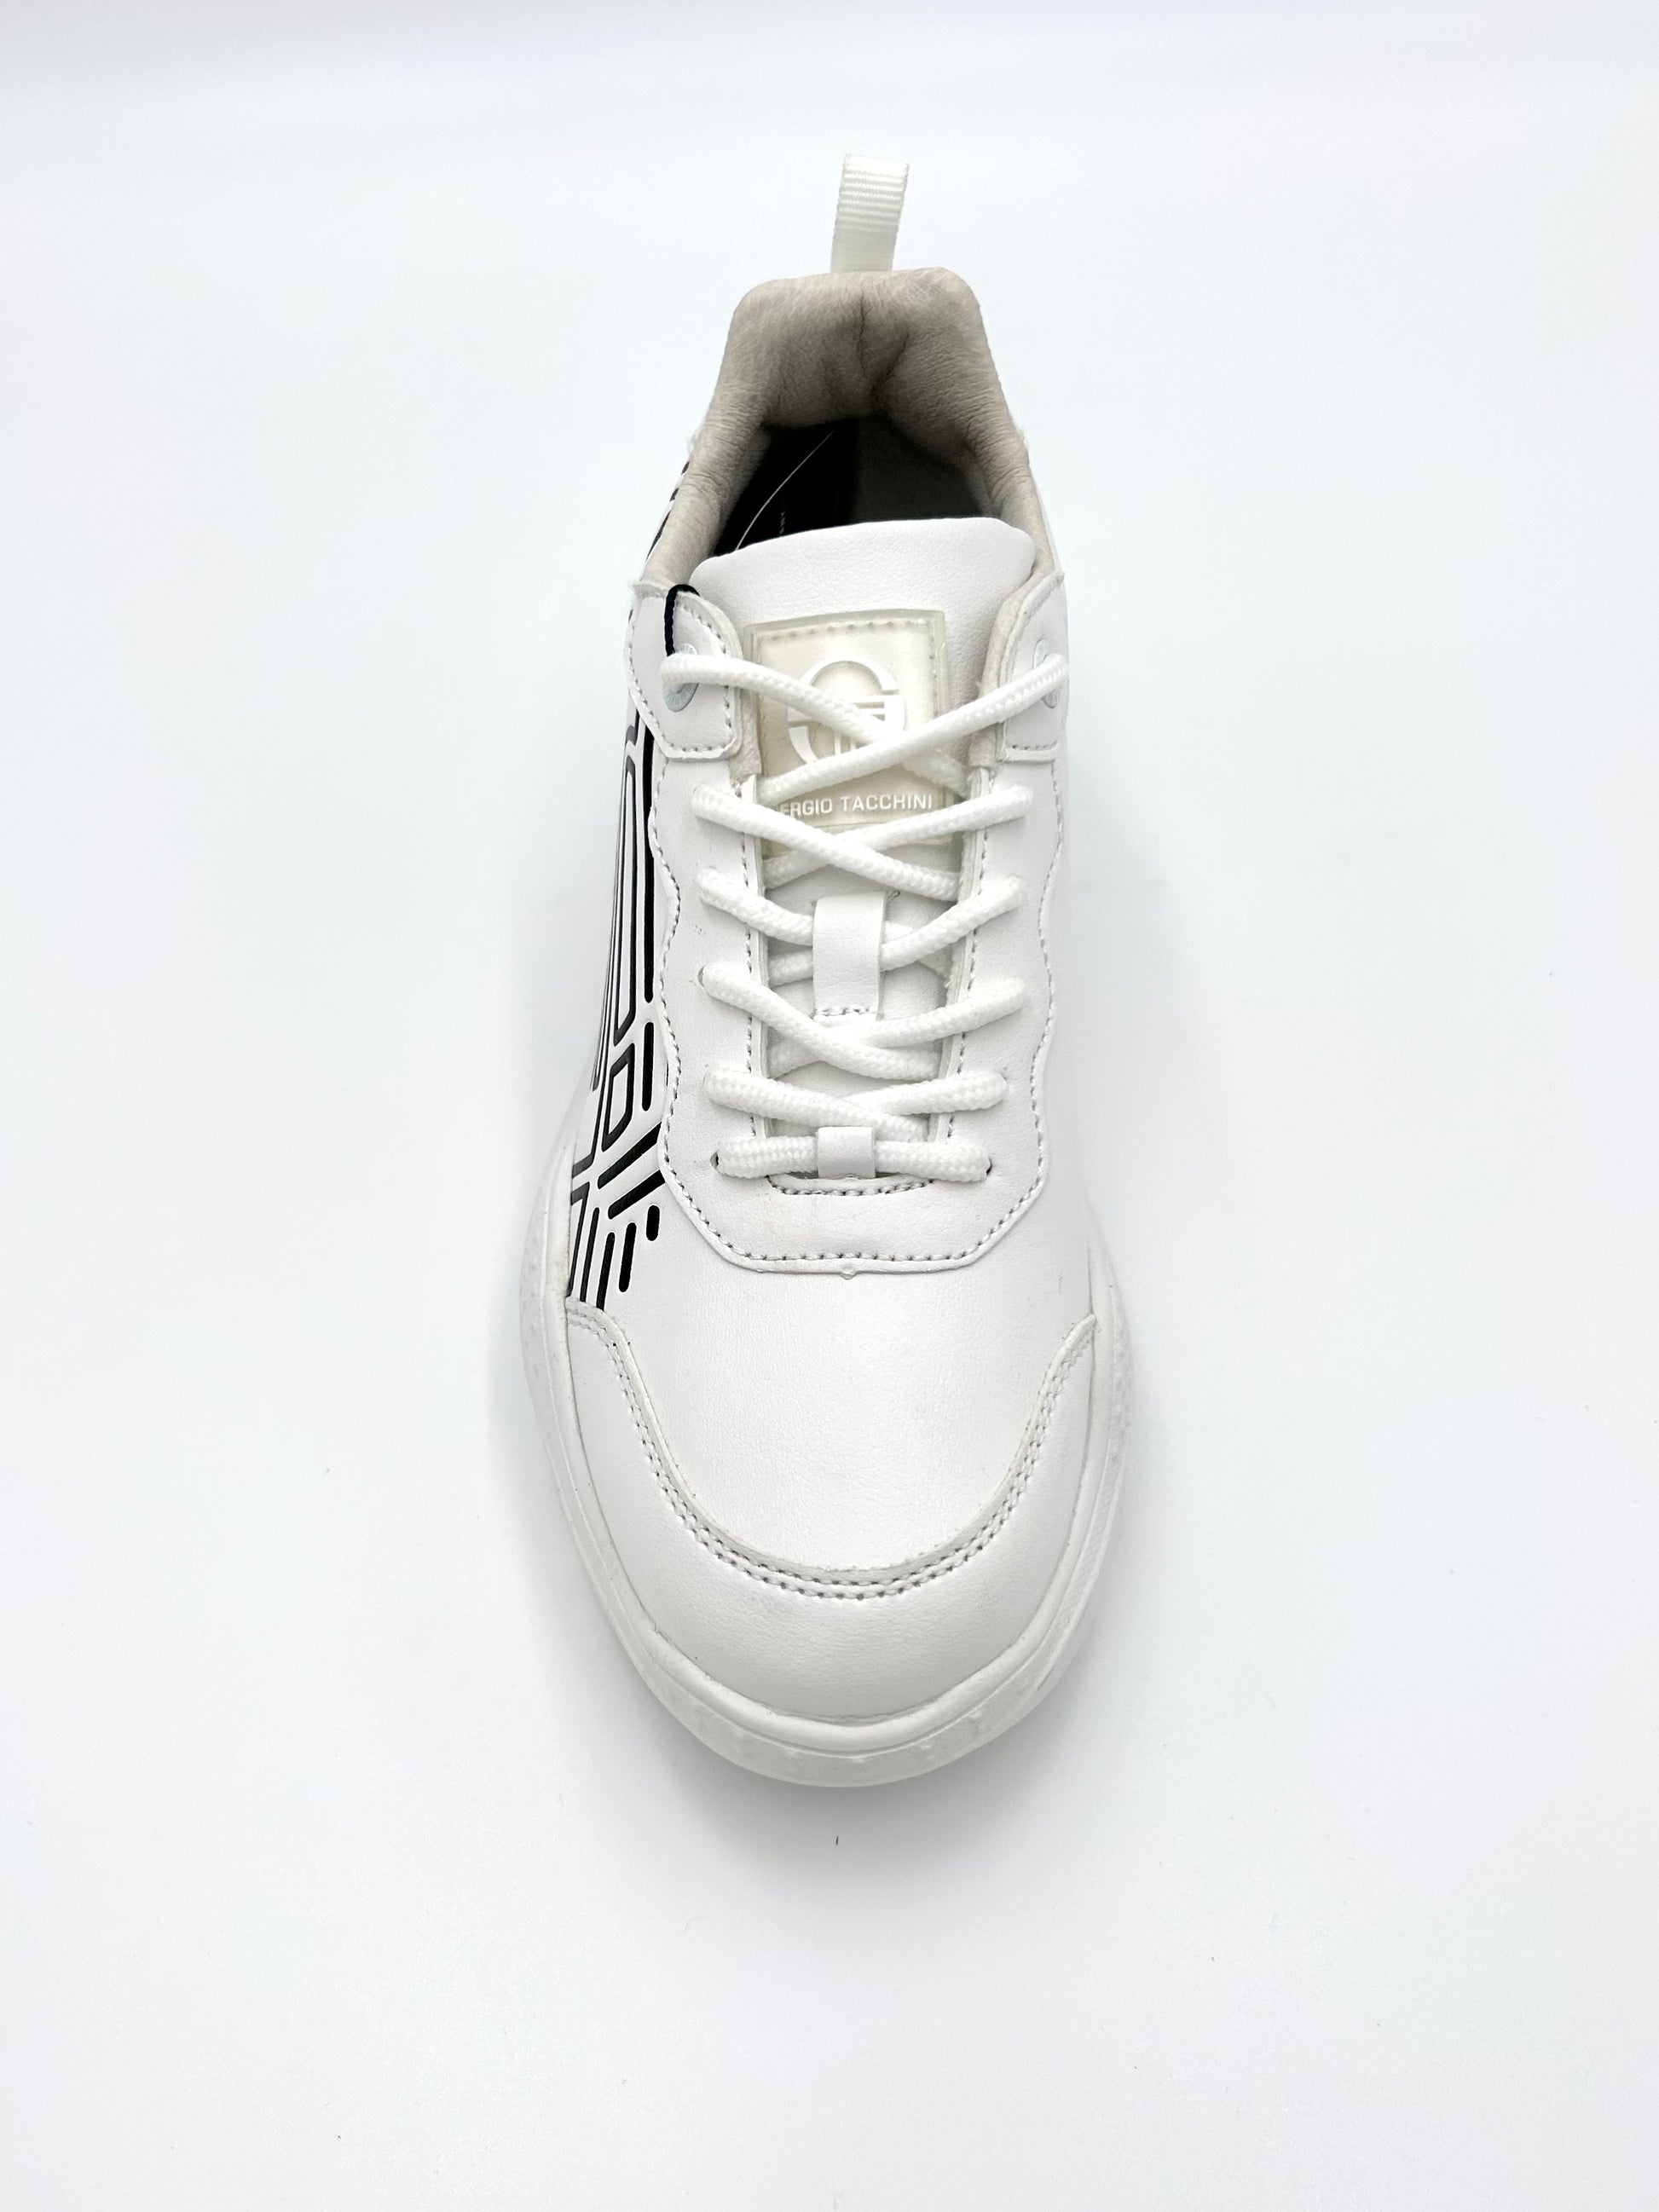 Sergio Tacchini Sneakers fantasia white - bianca - Sergio Tacchini